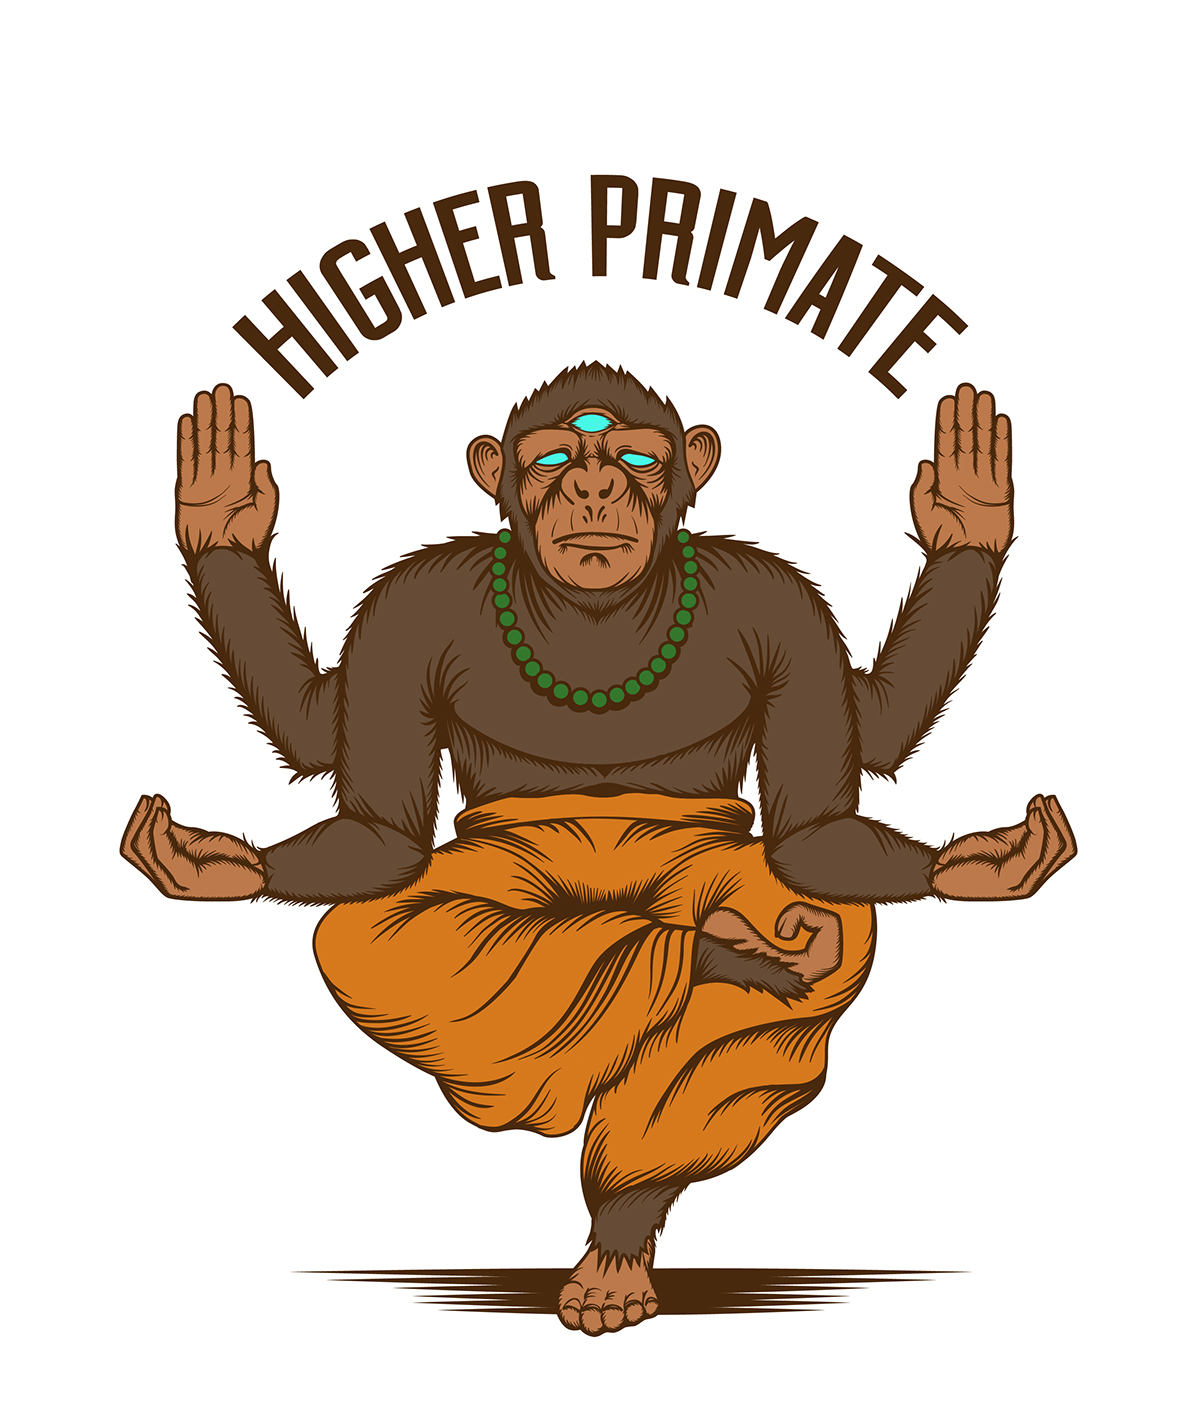 higher primate ape apparel Logo Design t-shirt package design  Hag Tag